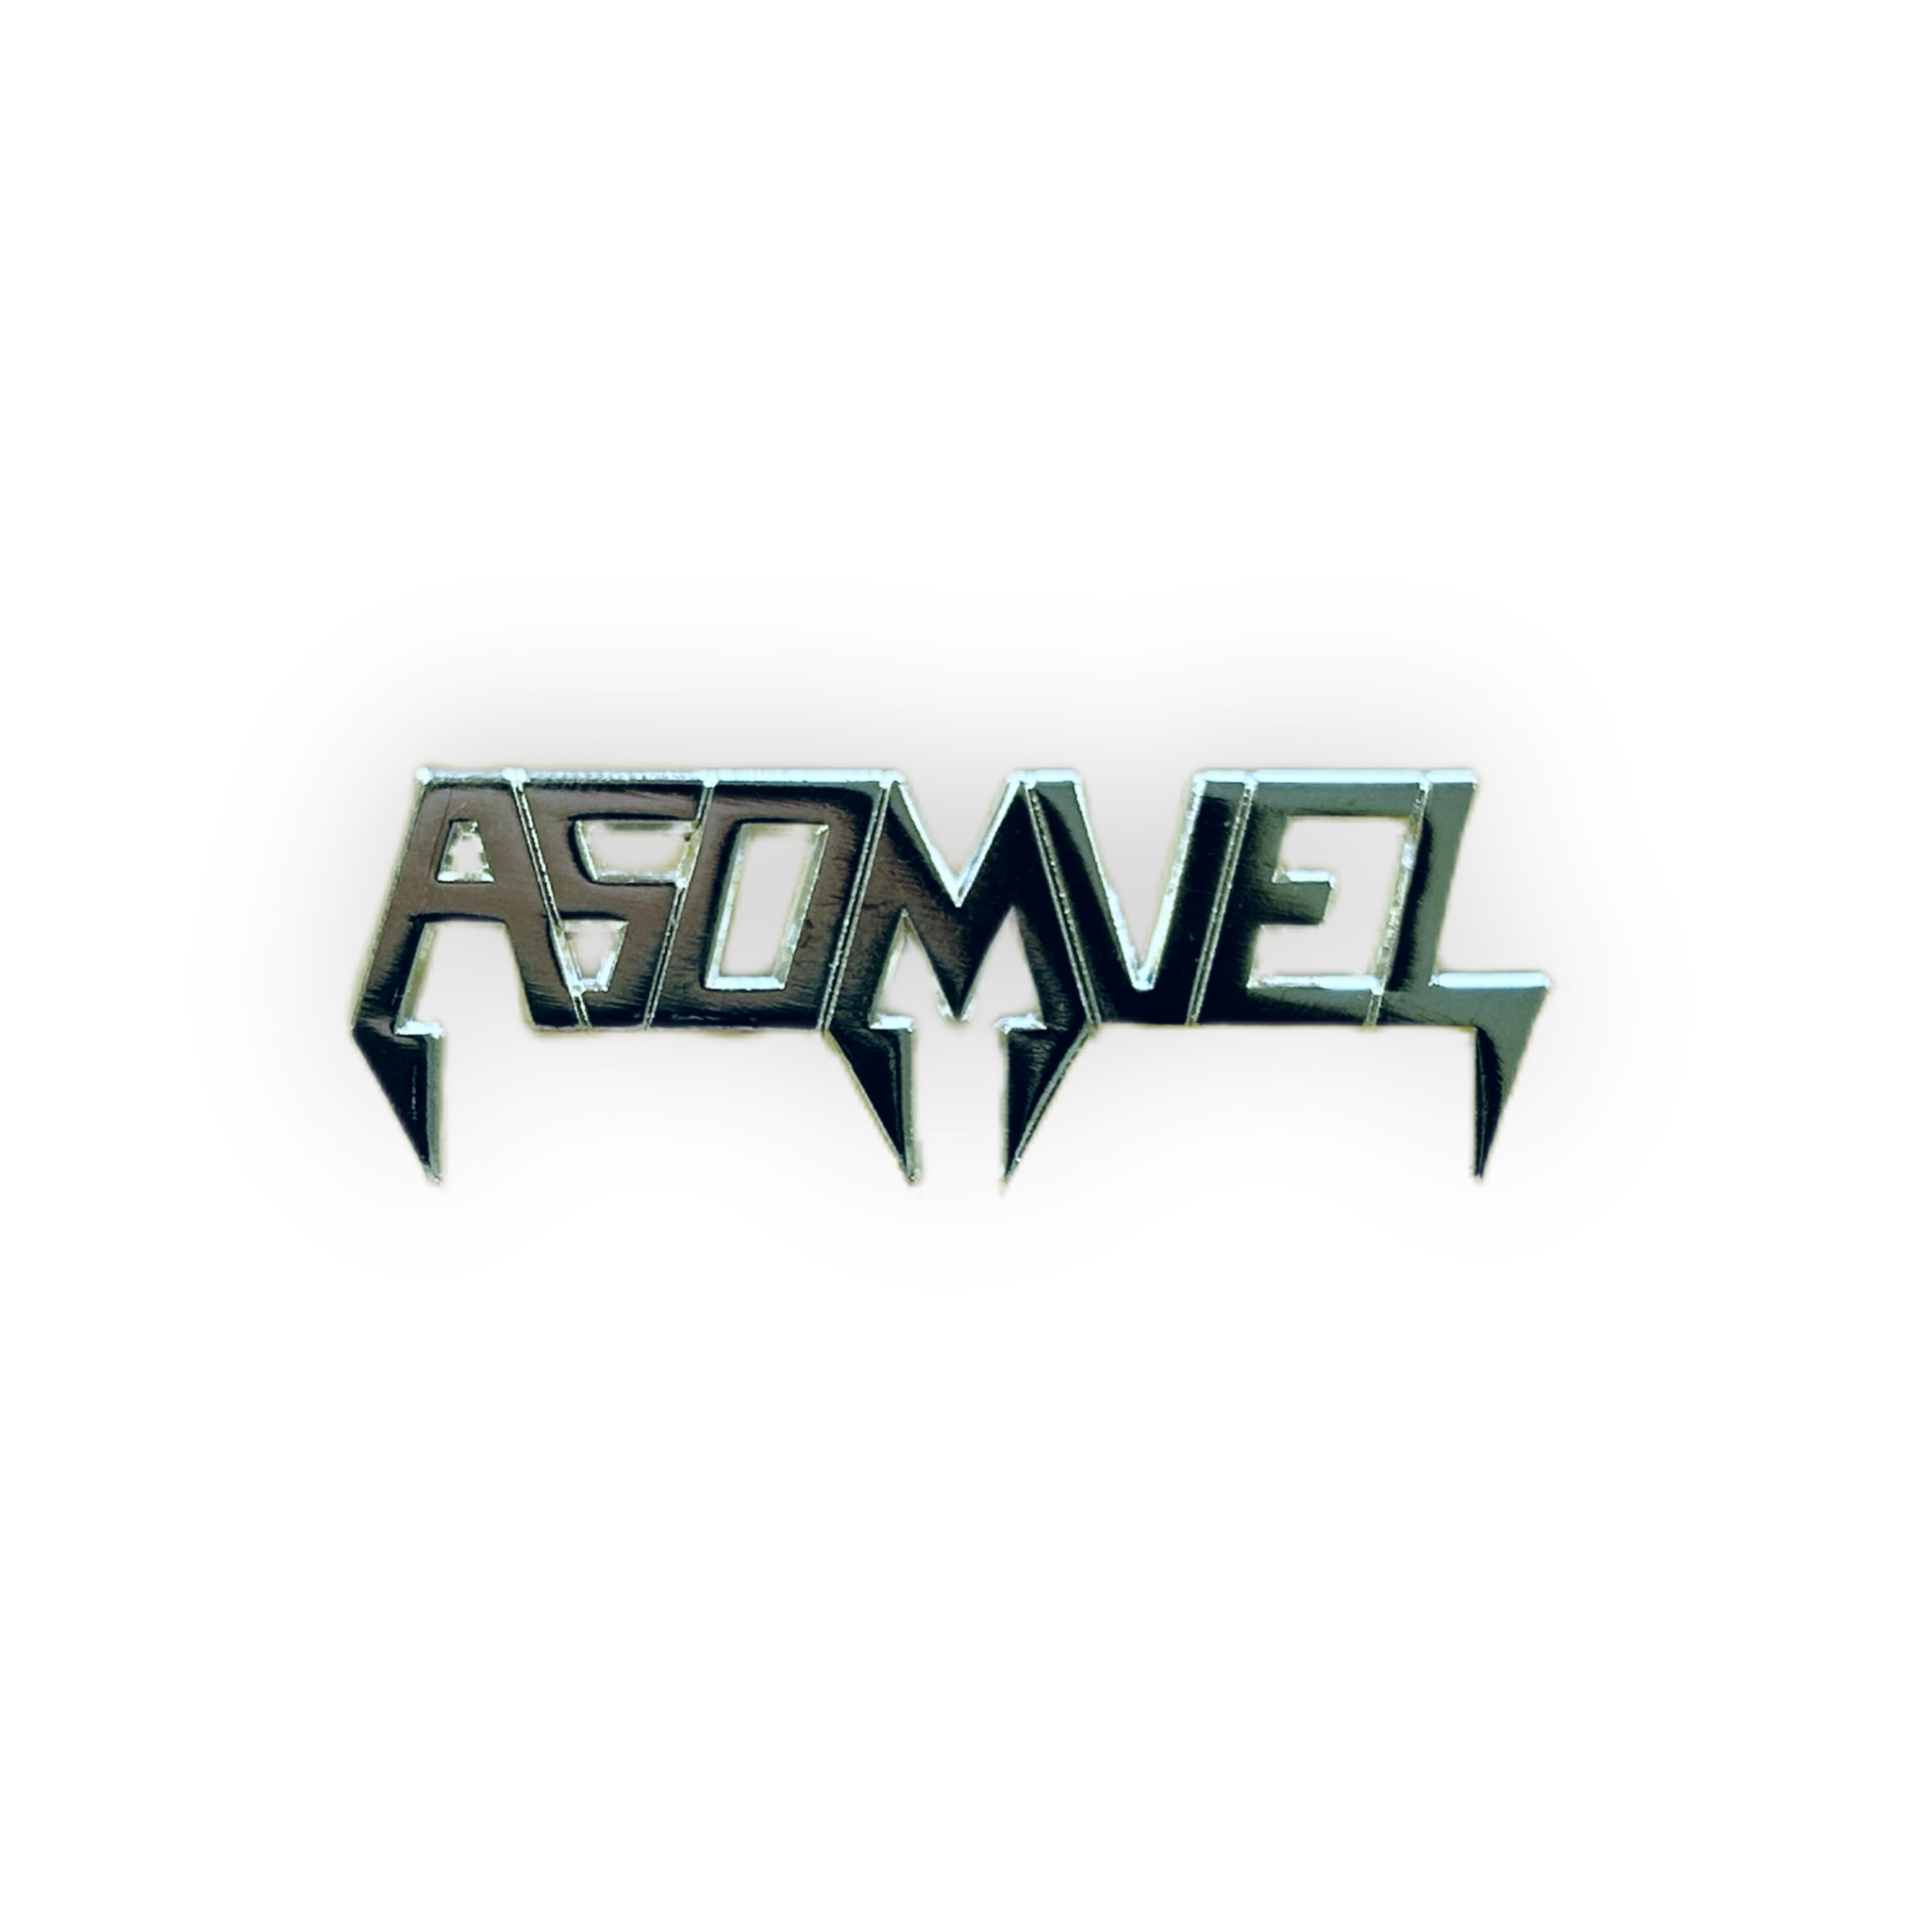 ASOMVEL Logo Pin Badge